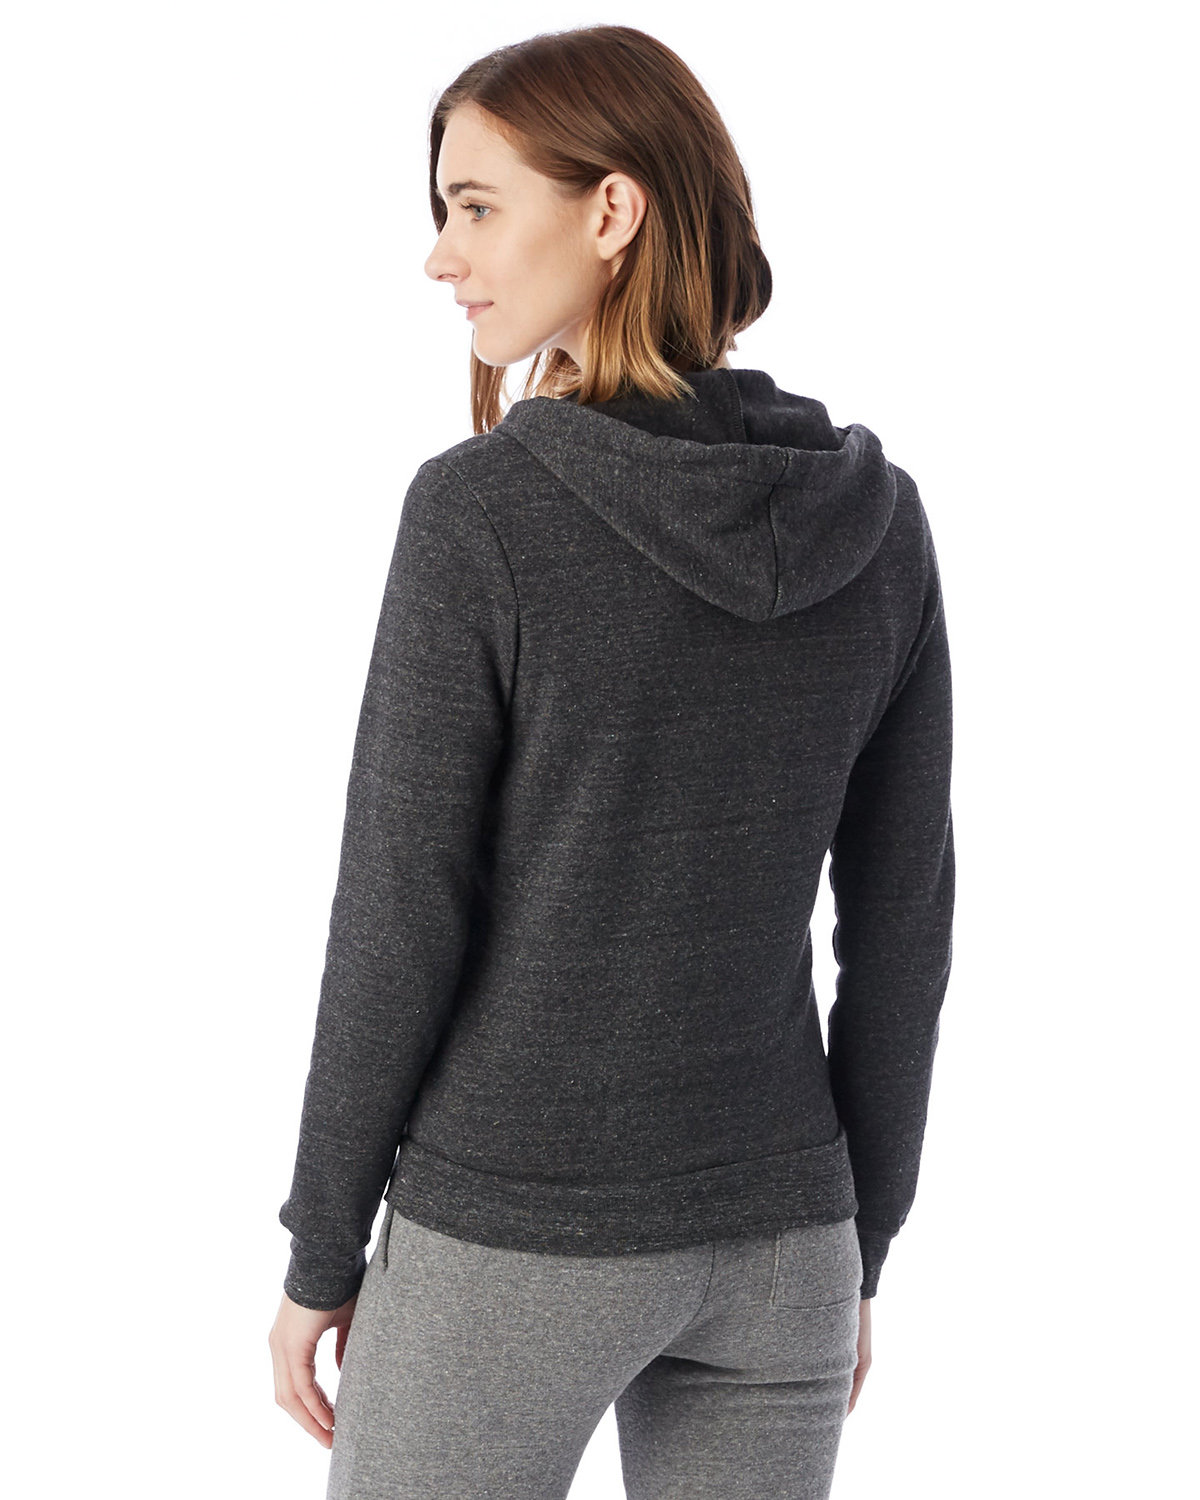 Etonic Women's FLX Pullover Hoodie, Charcoal Heather, Medium